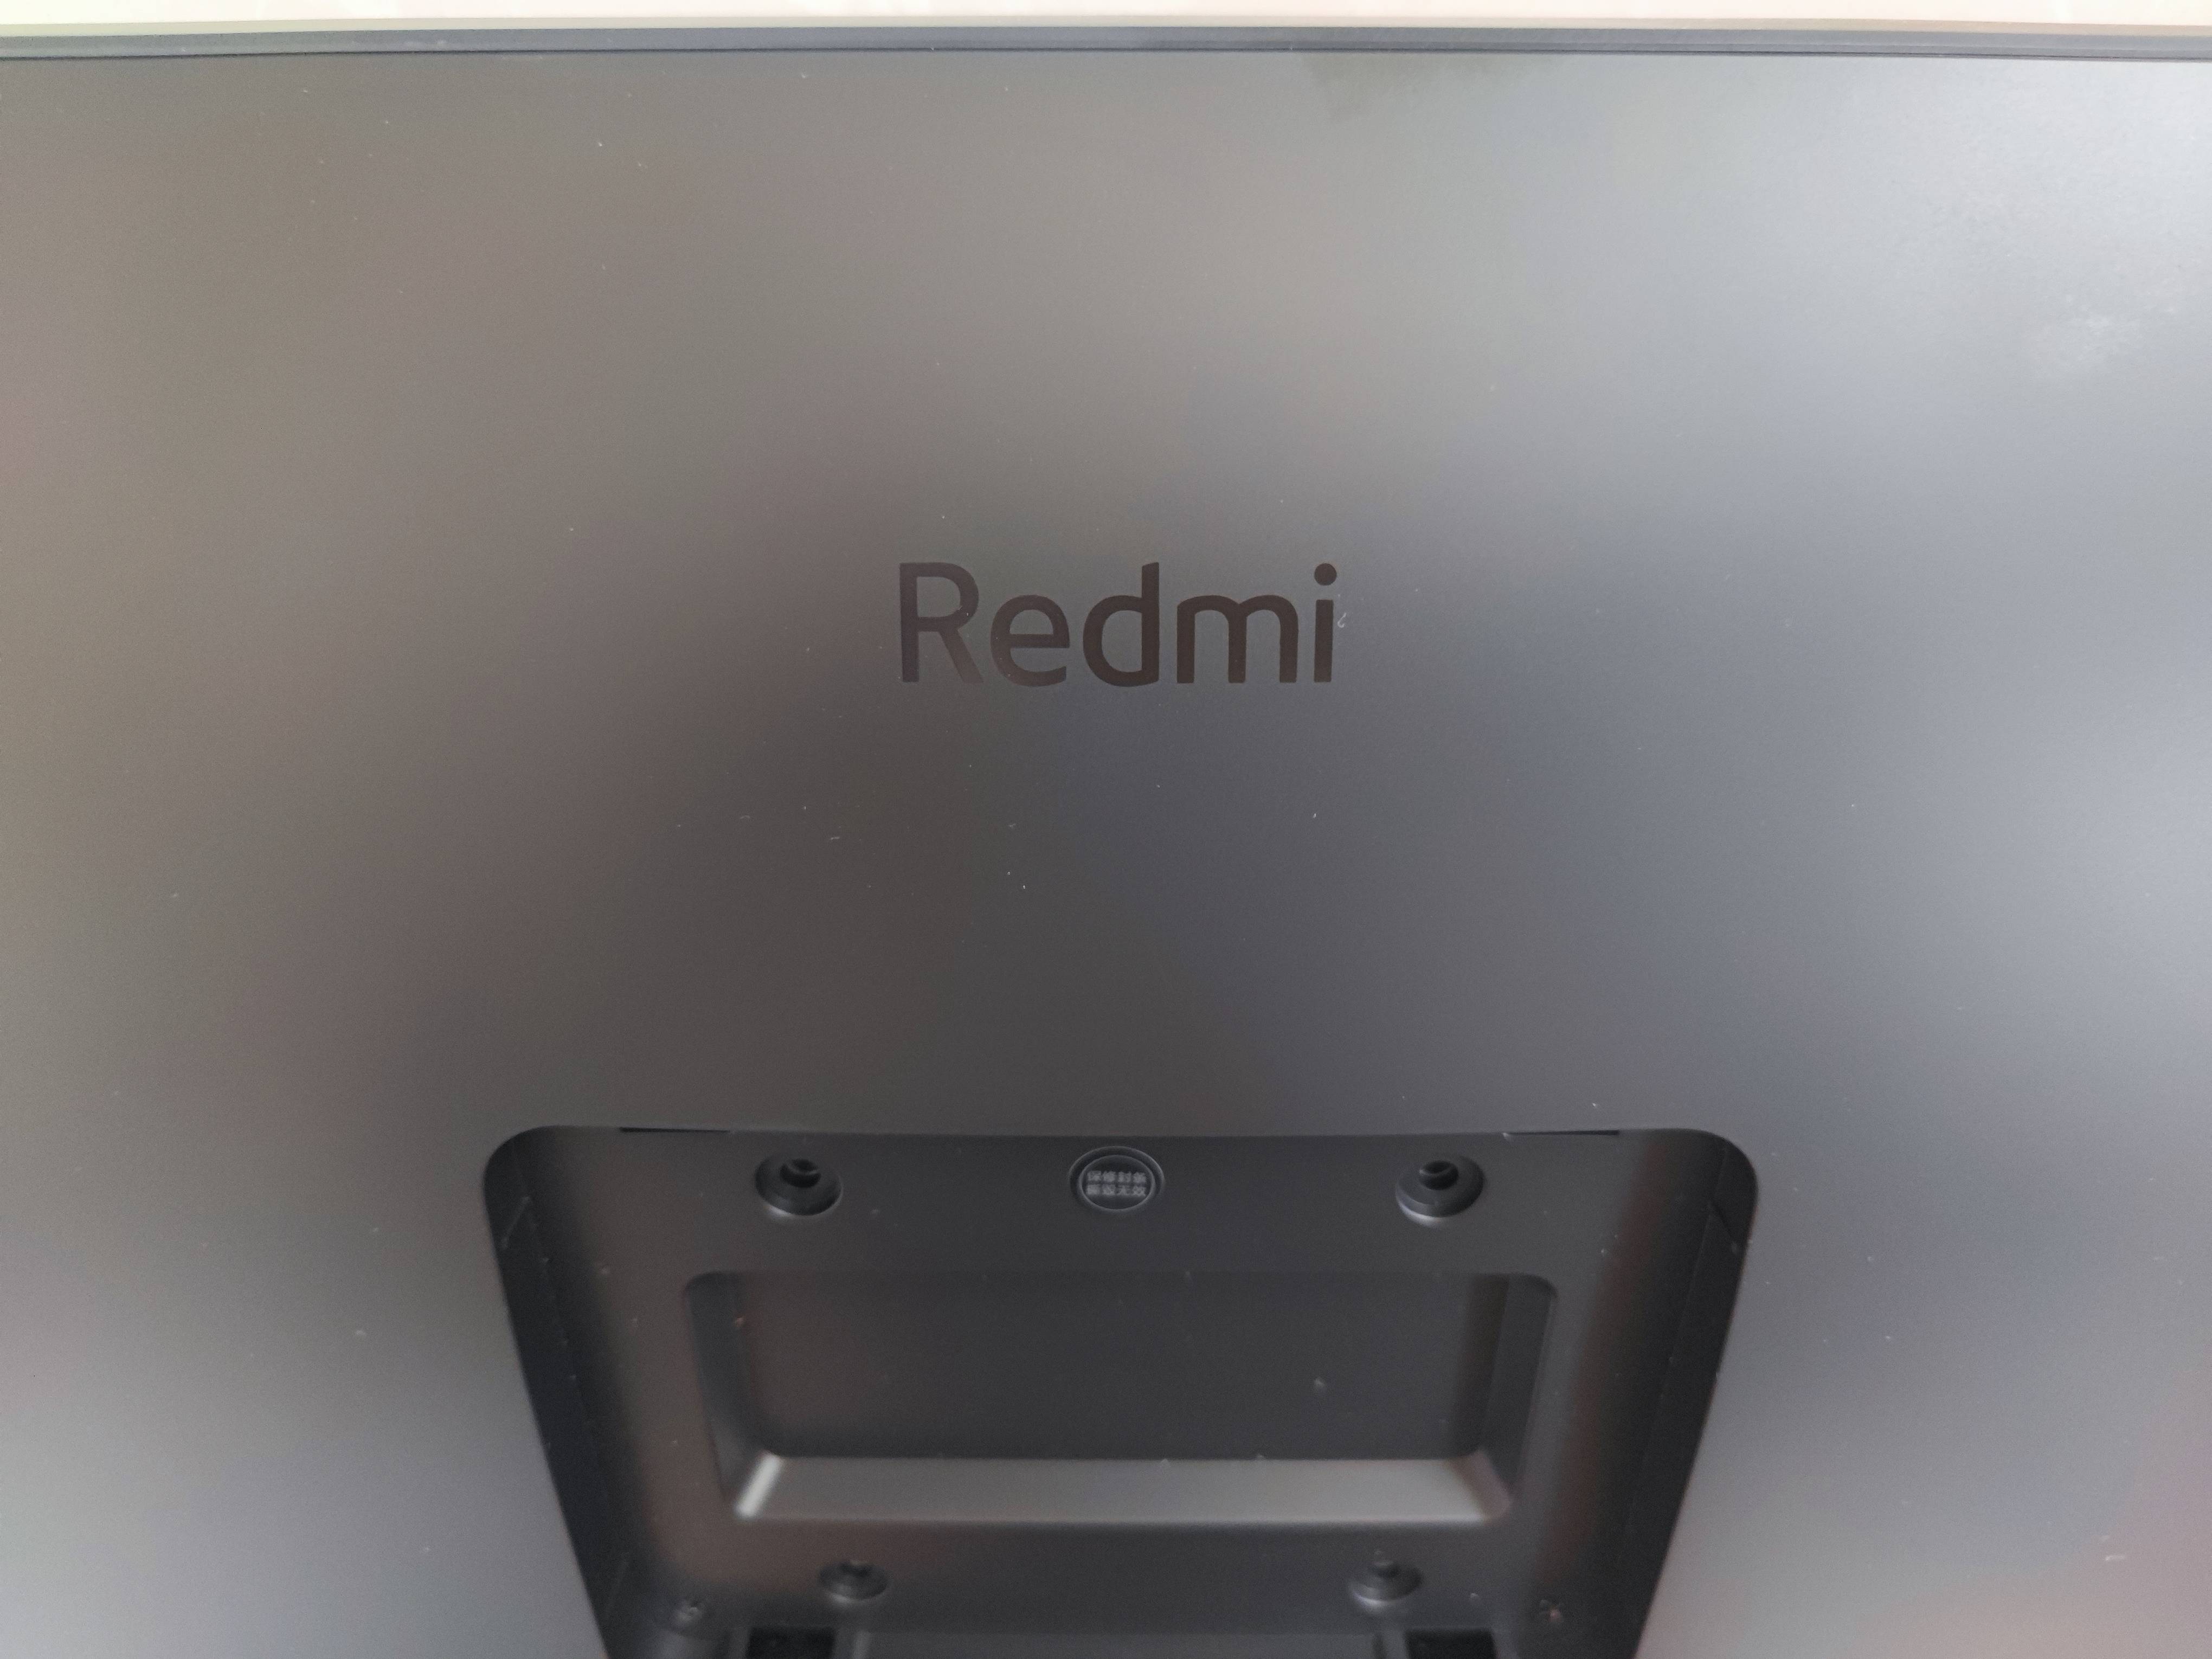 Redmi首款曲面屏带你玩转PC端，惊喜里带有遗憾